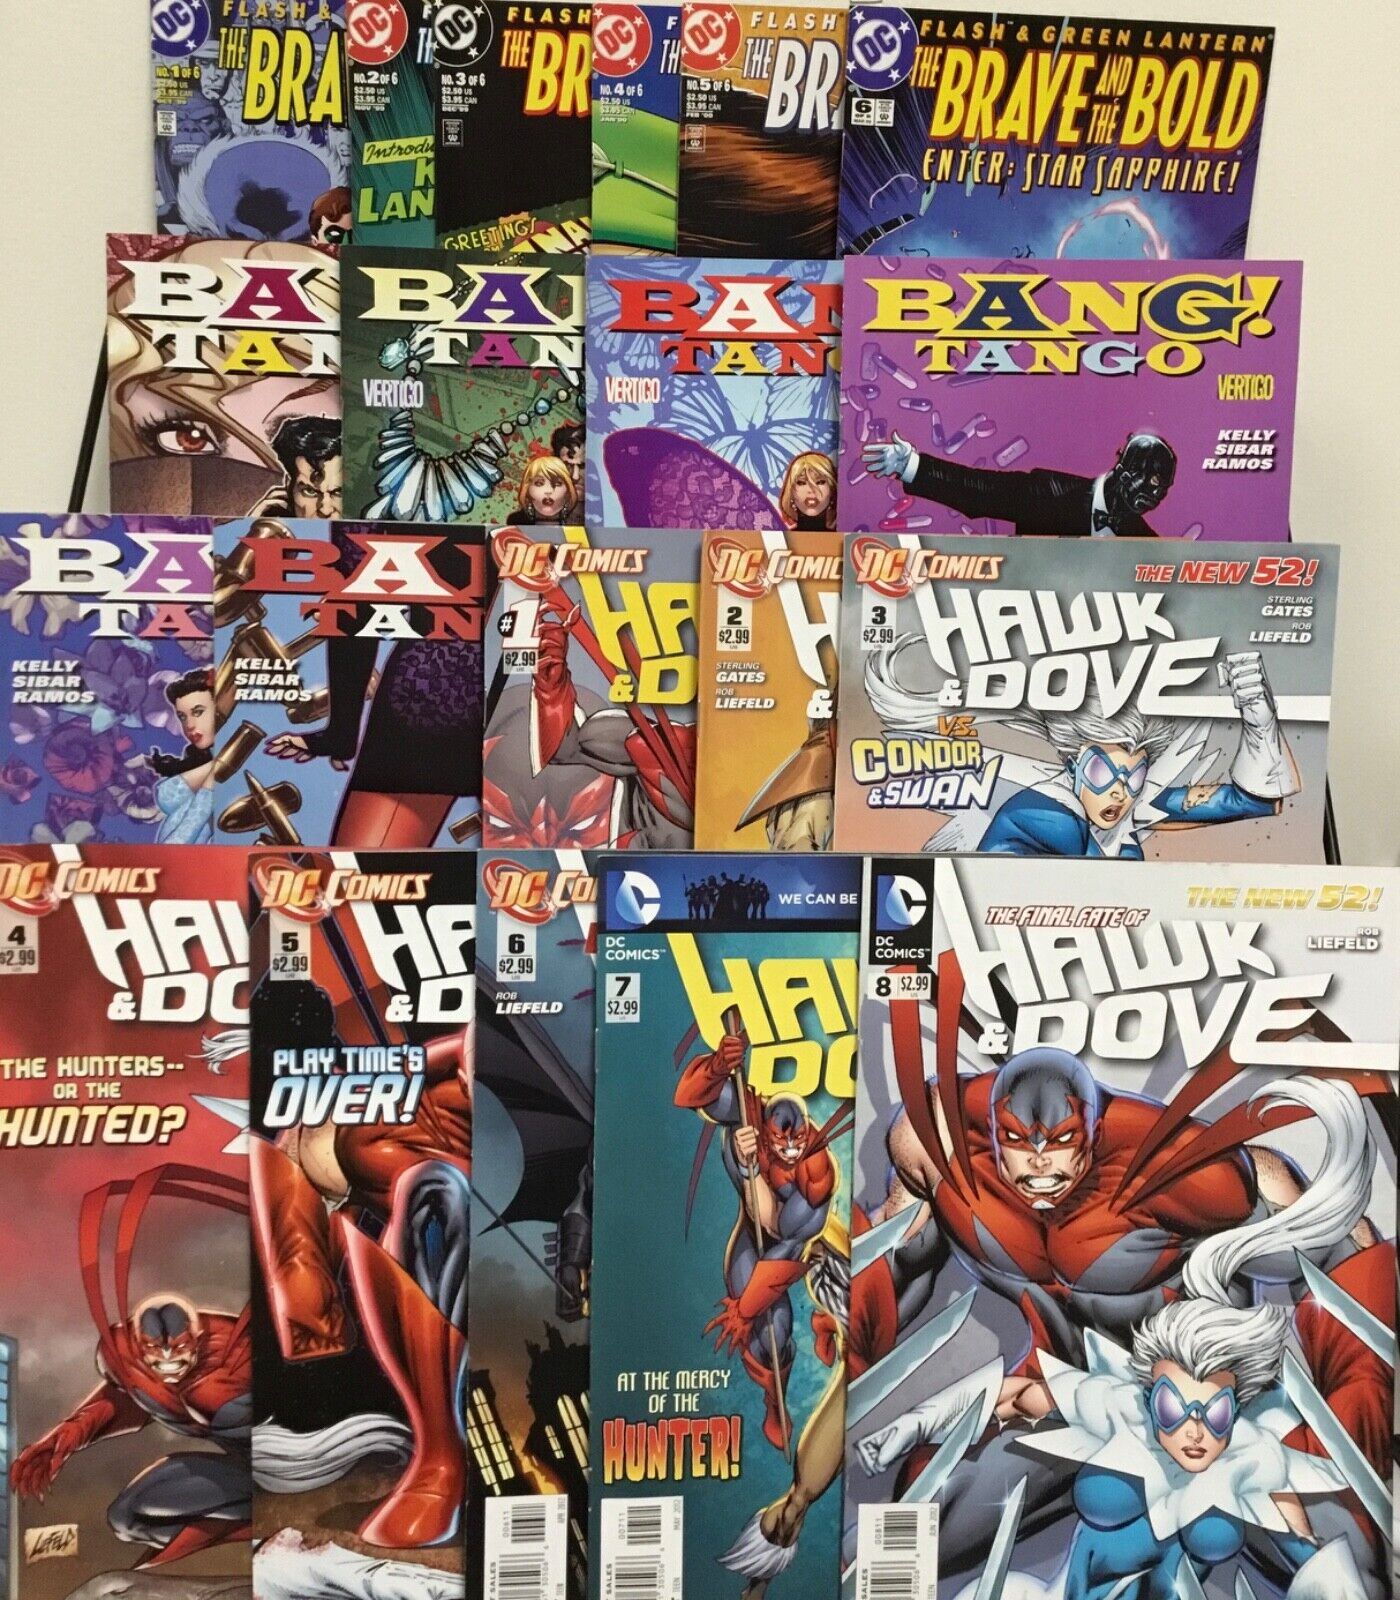 DC Comics Brave and the Bold 1-6, Bang Tango 1-5, Hawk & Dove 1-8